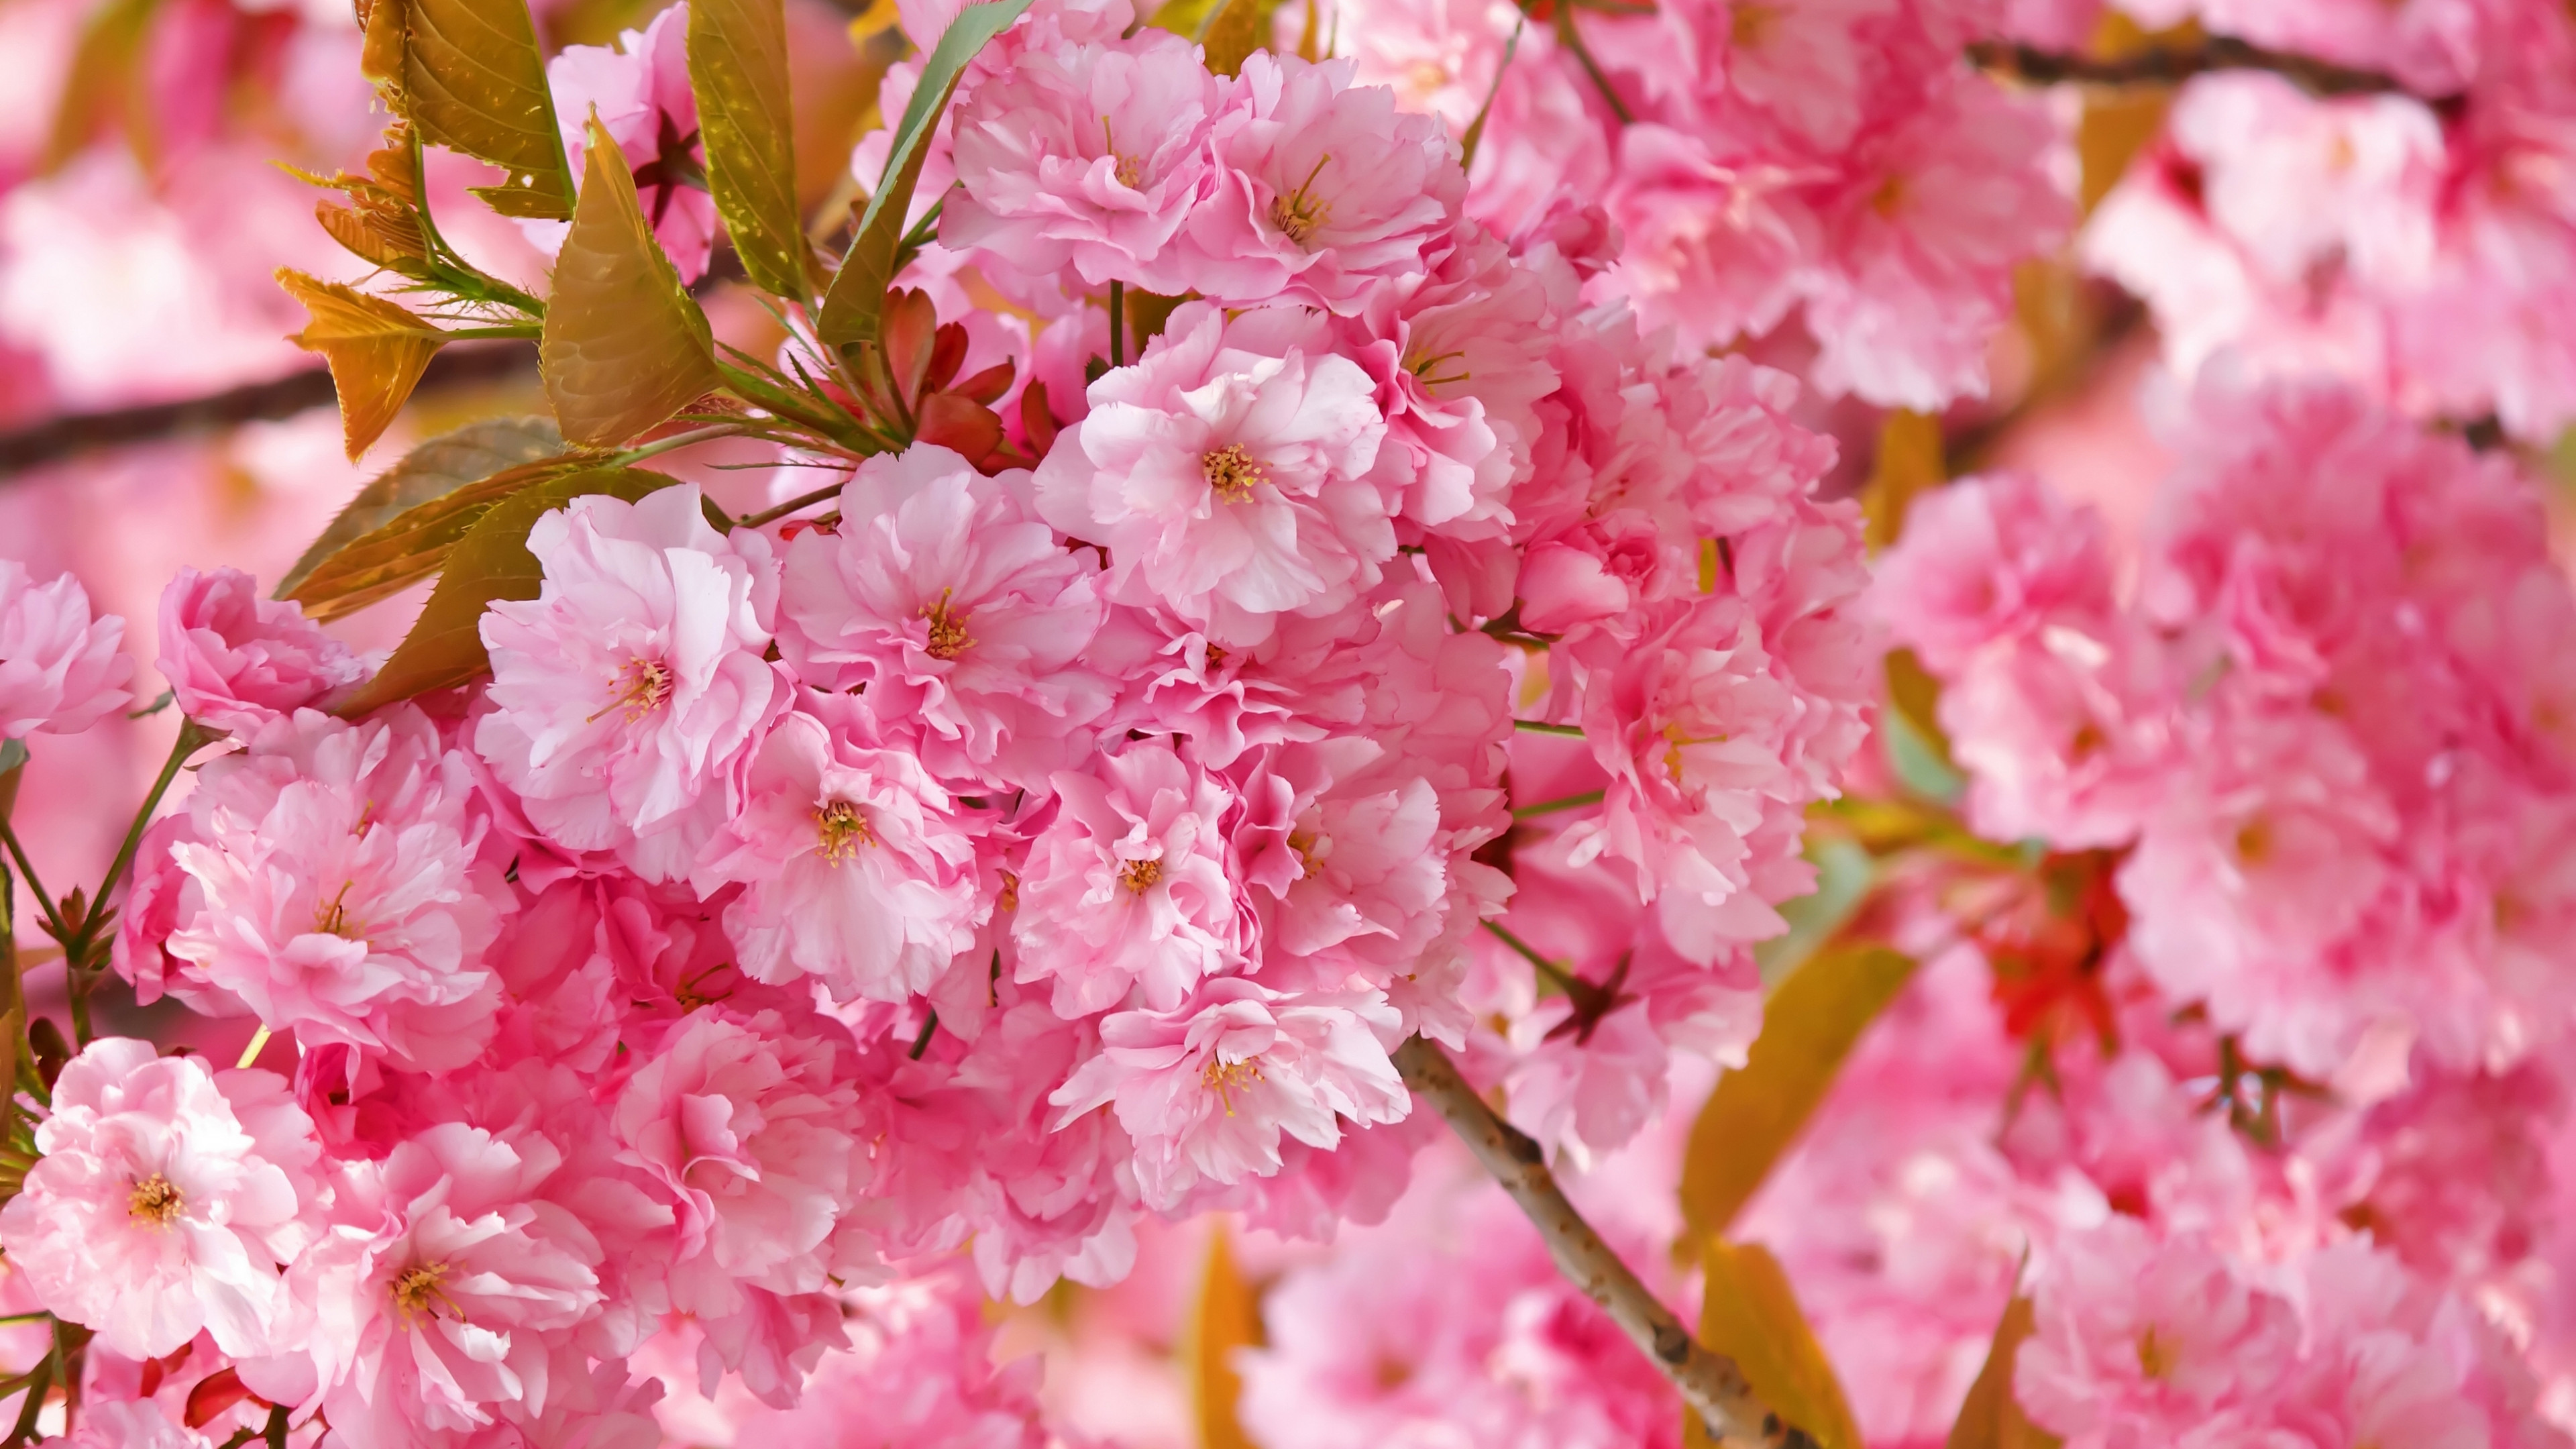 Pink Cherry Blossom Wallpaper Hd